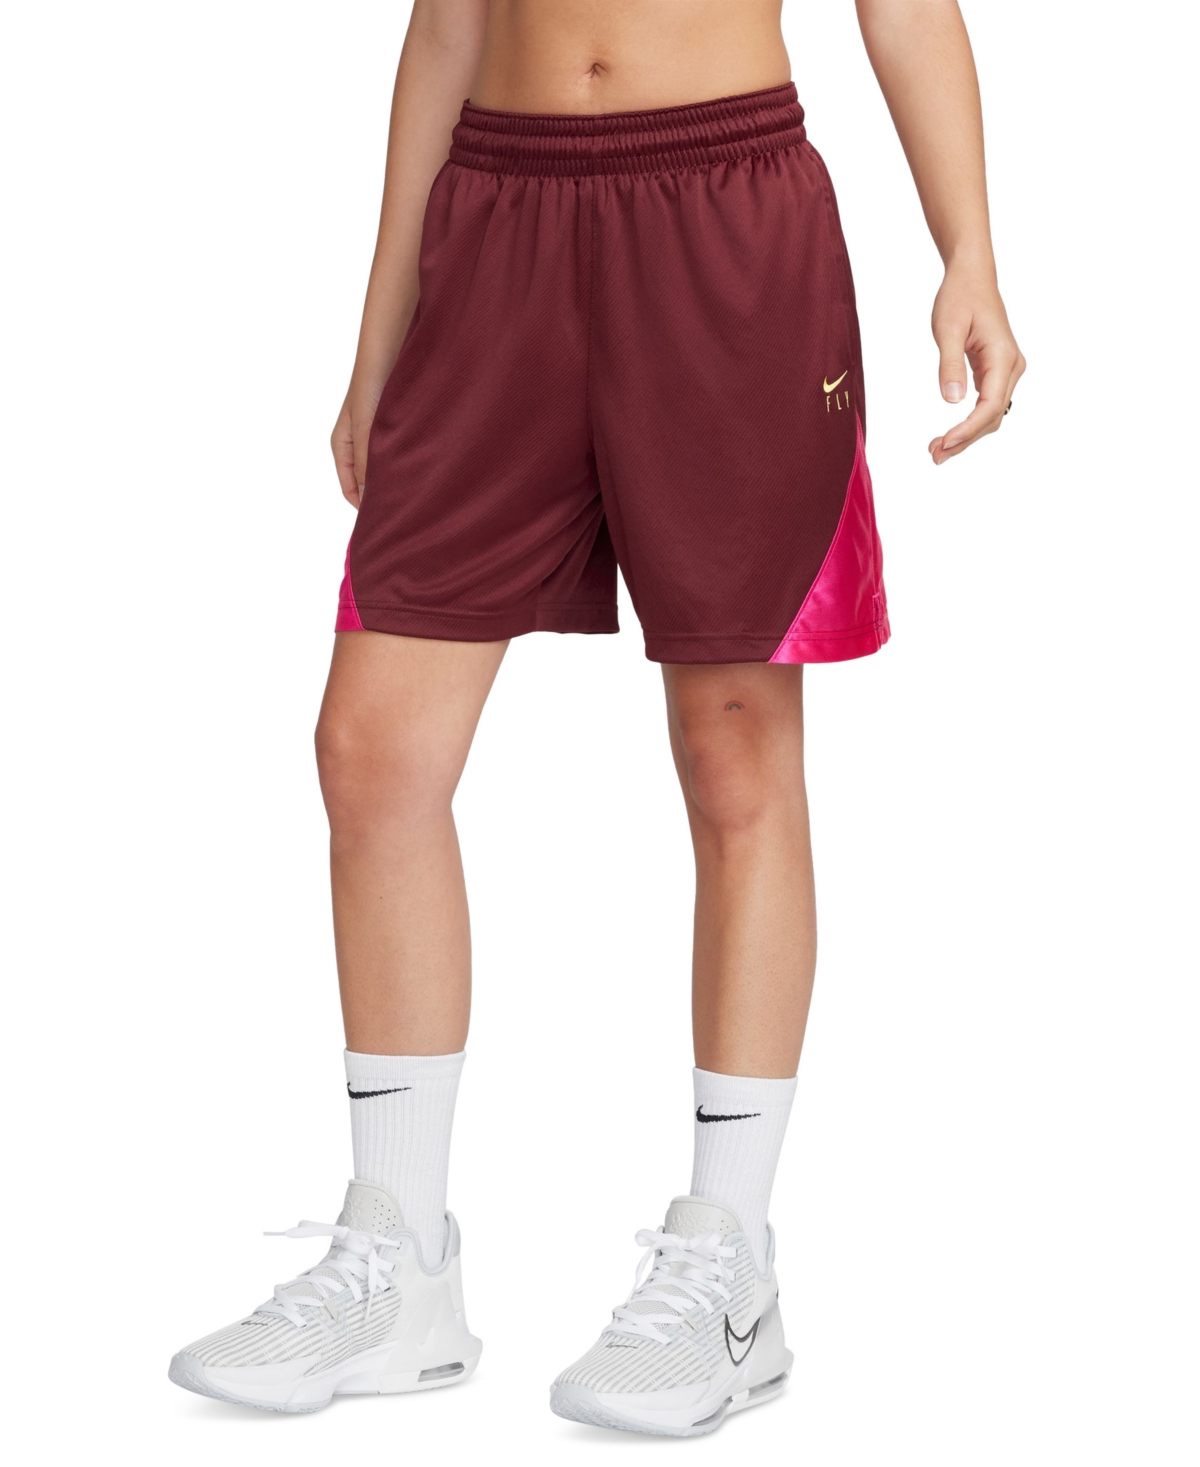 Women's Dri-fit ISoFly Basketball Shorts - Dark Team Red/alchemy Pink/soft Yellow